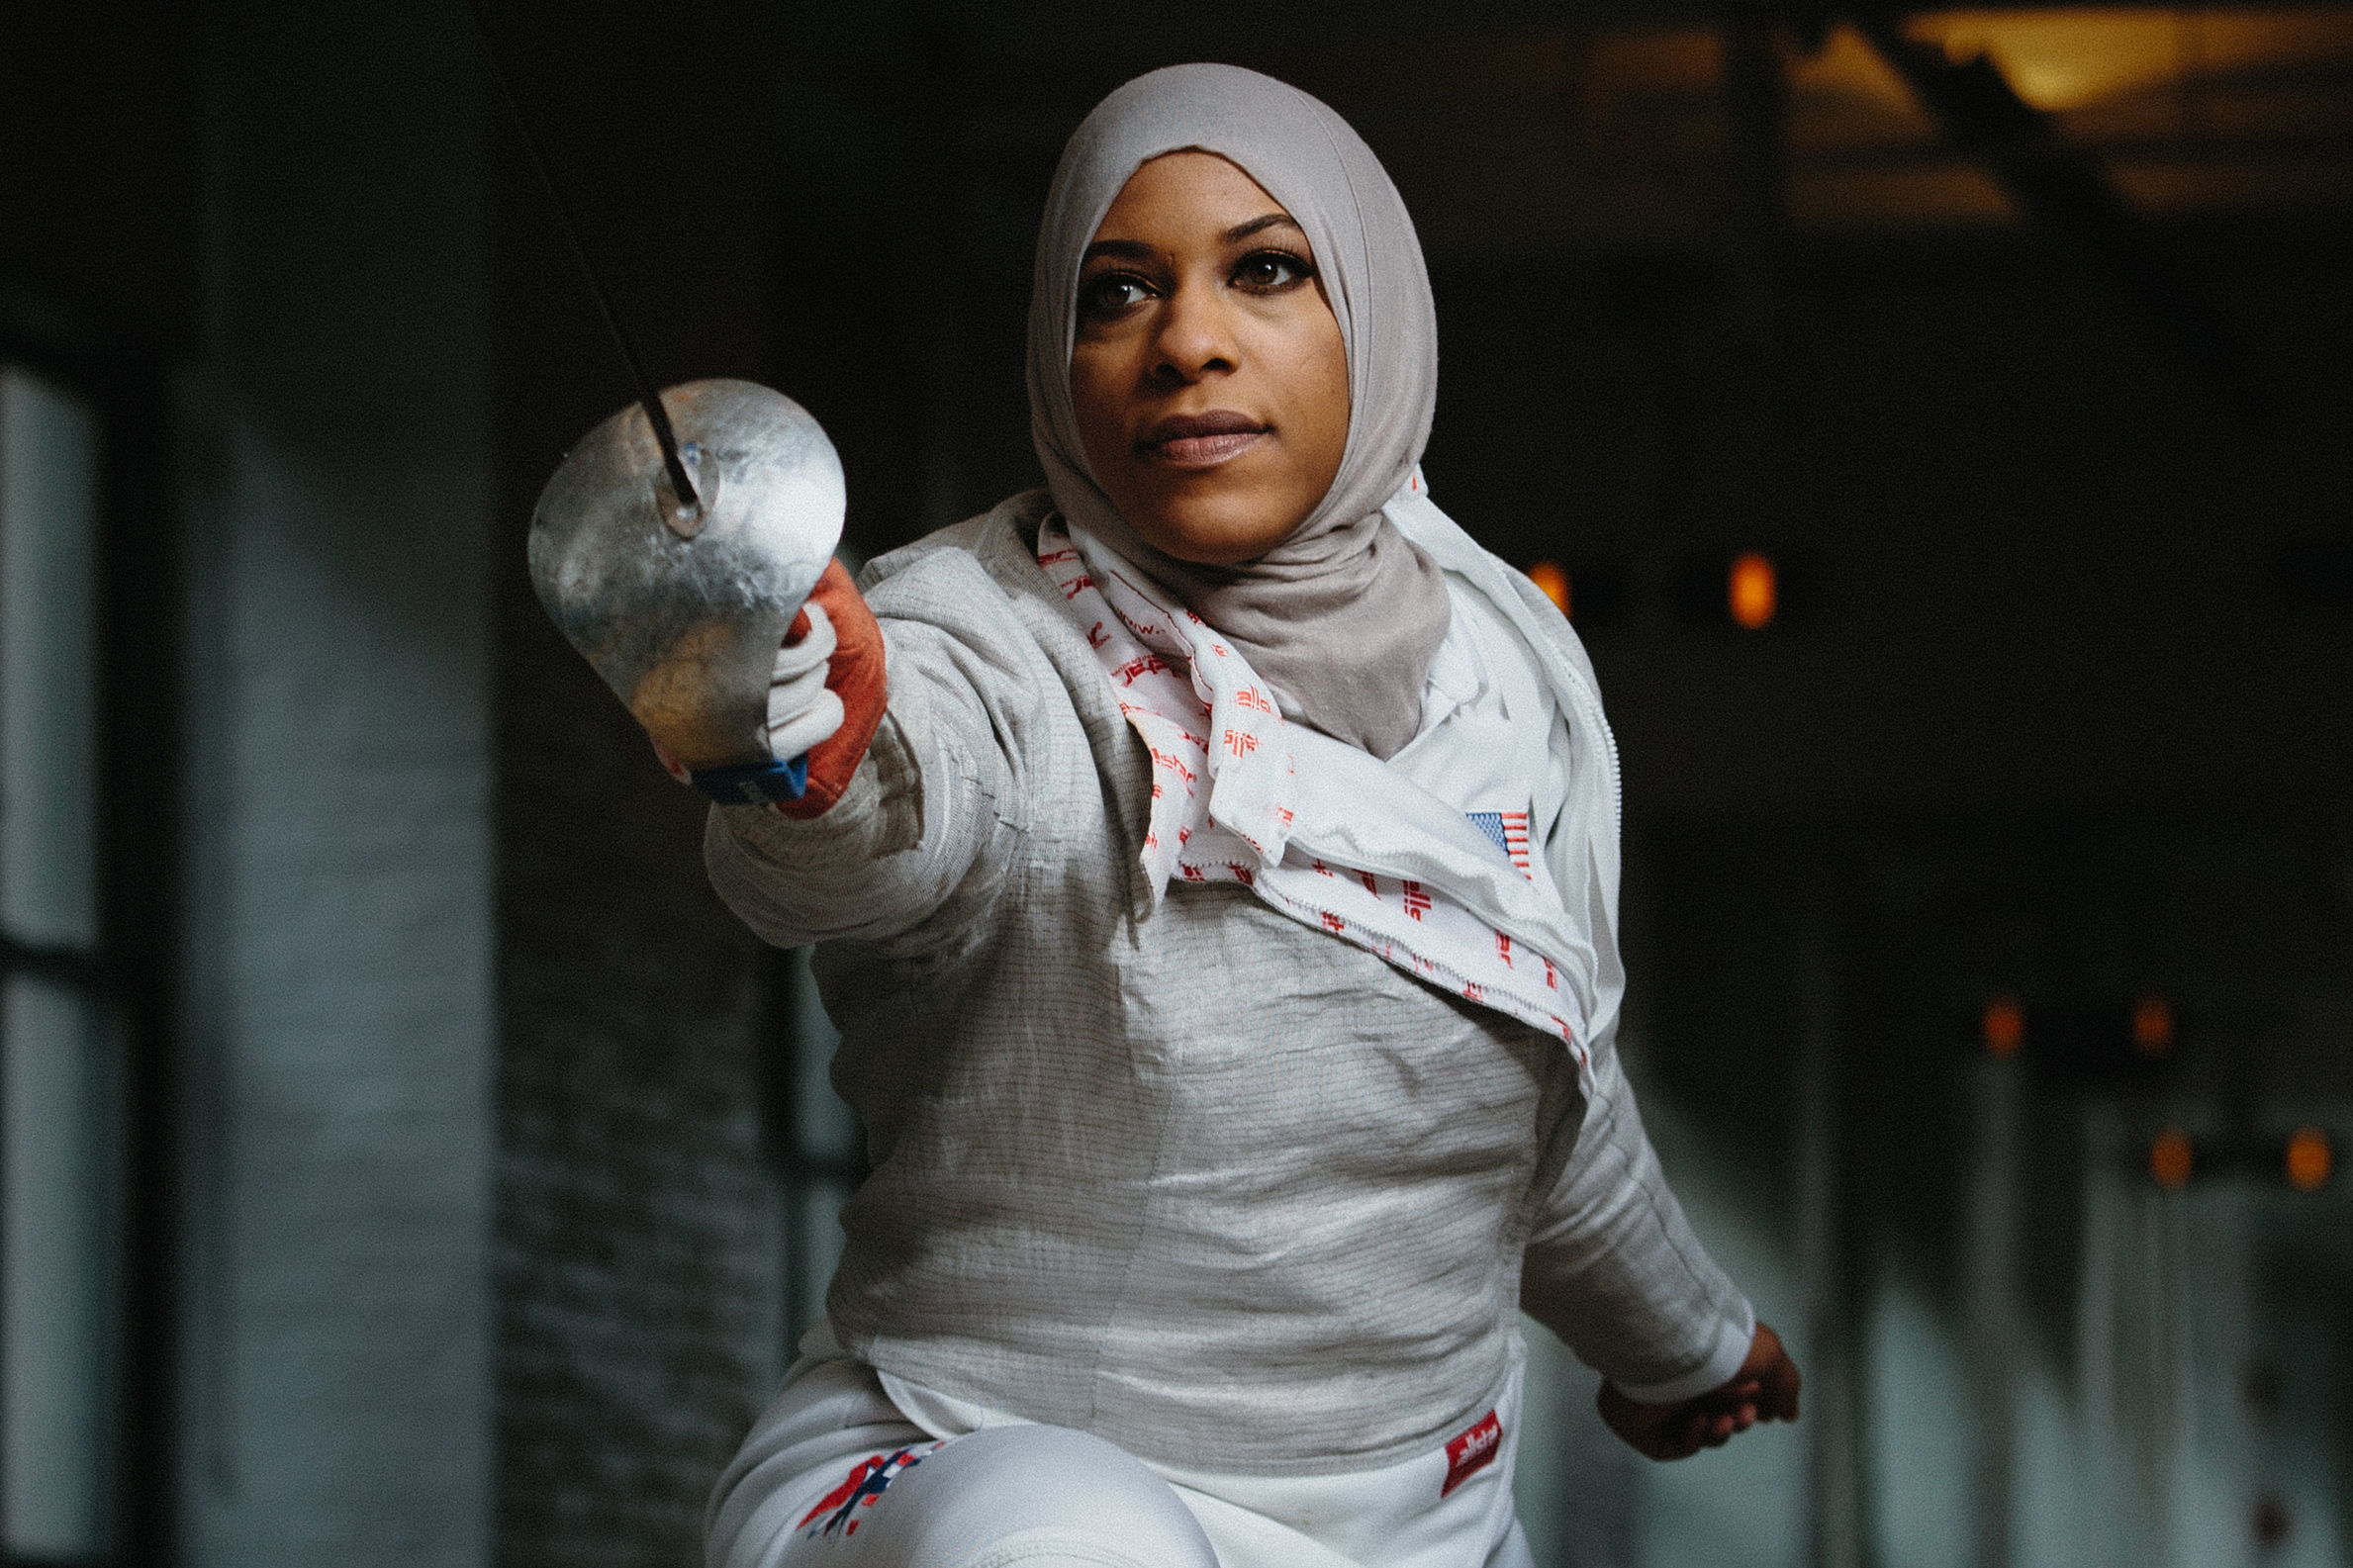 Ibtihaj Muhammad photographed at the Fencer, New York, on feb 9, 2016.